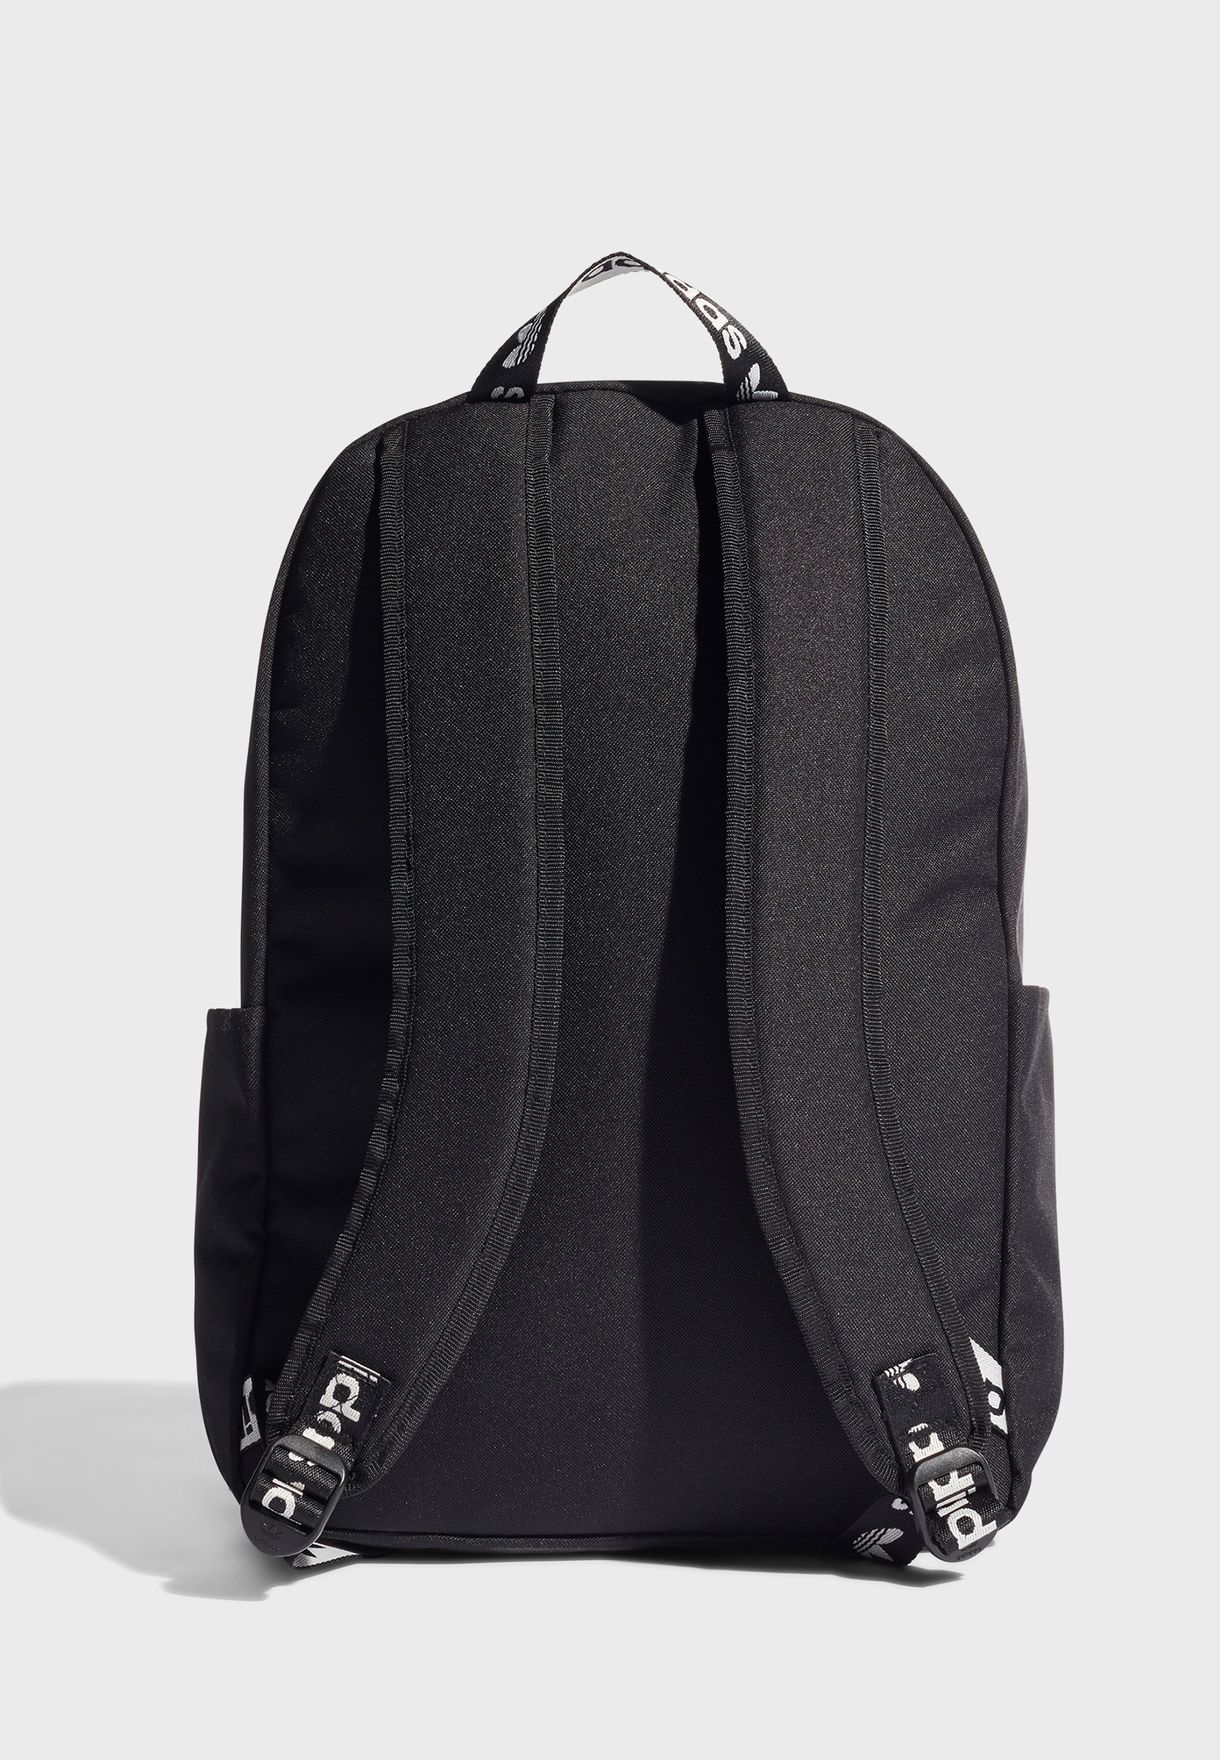 Adicolor Classic Backpack